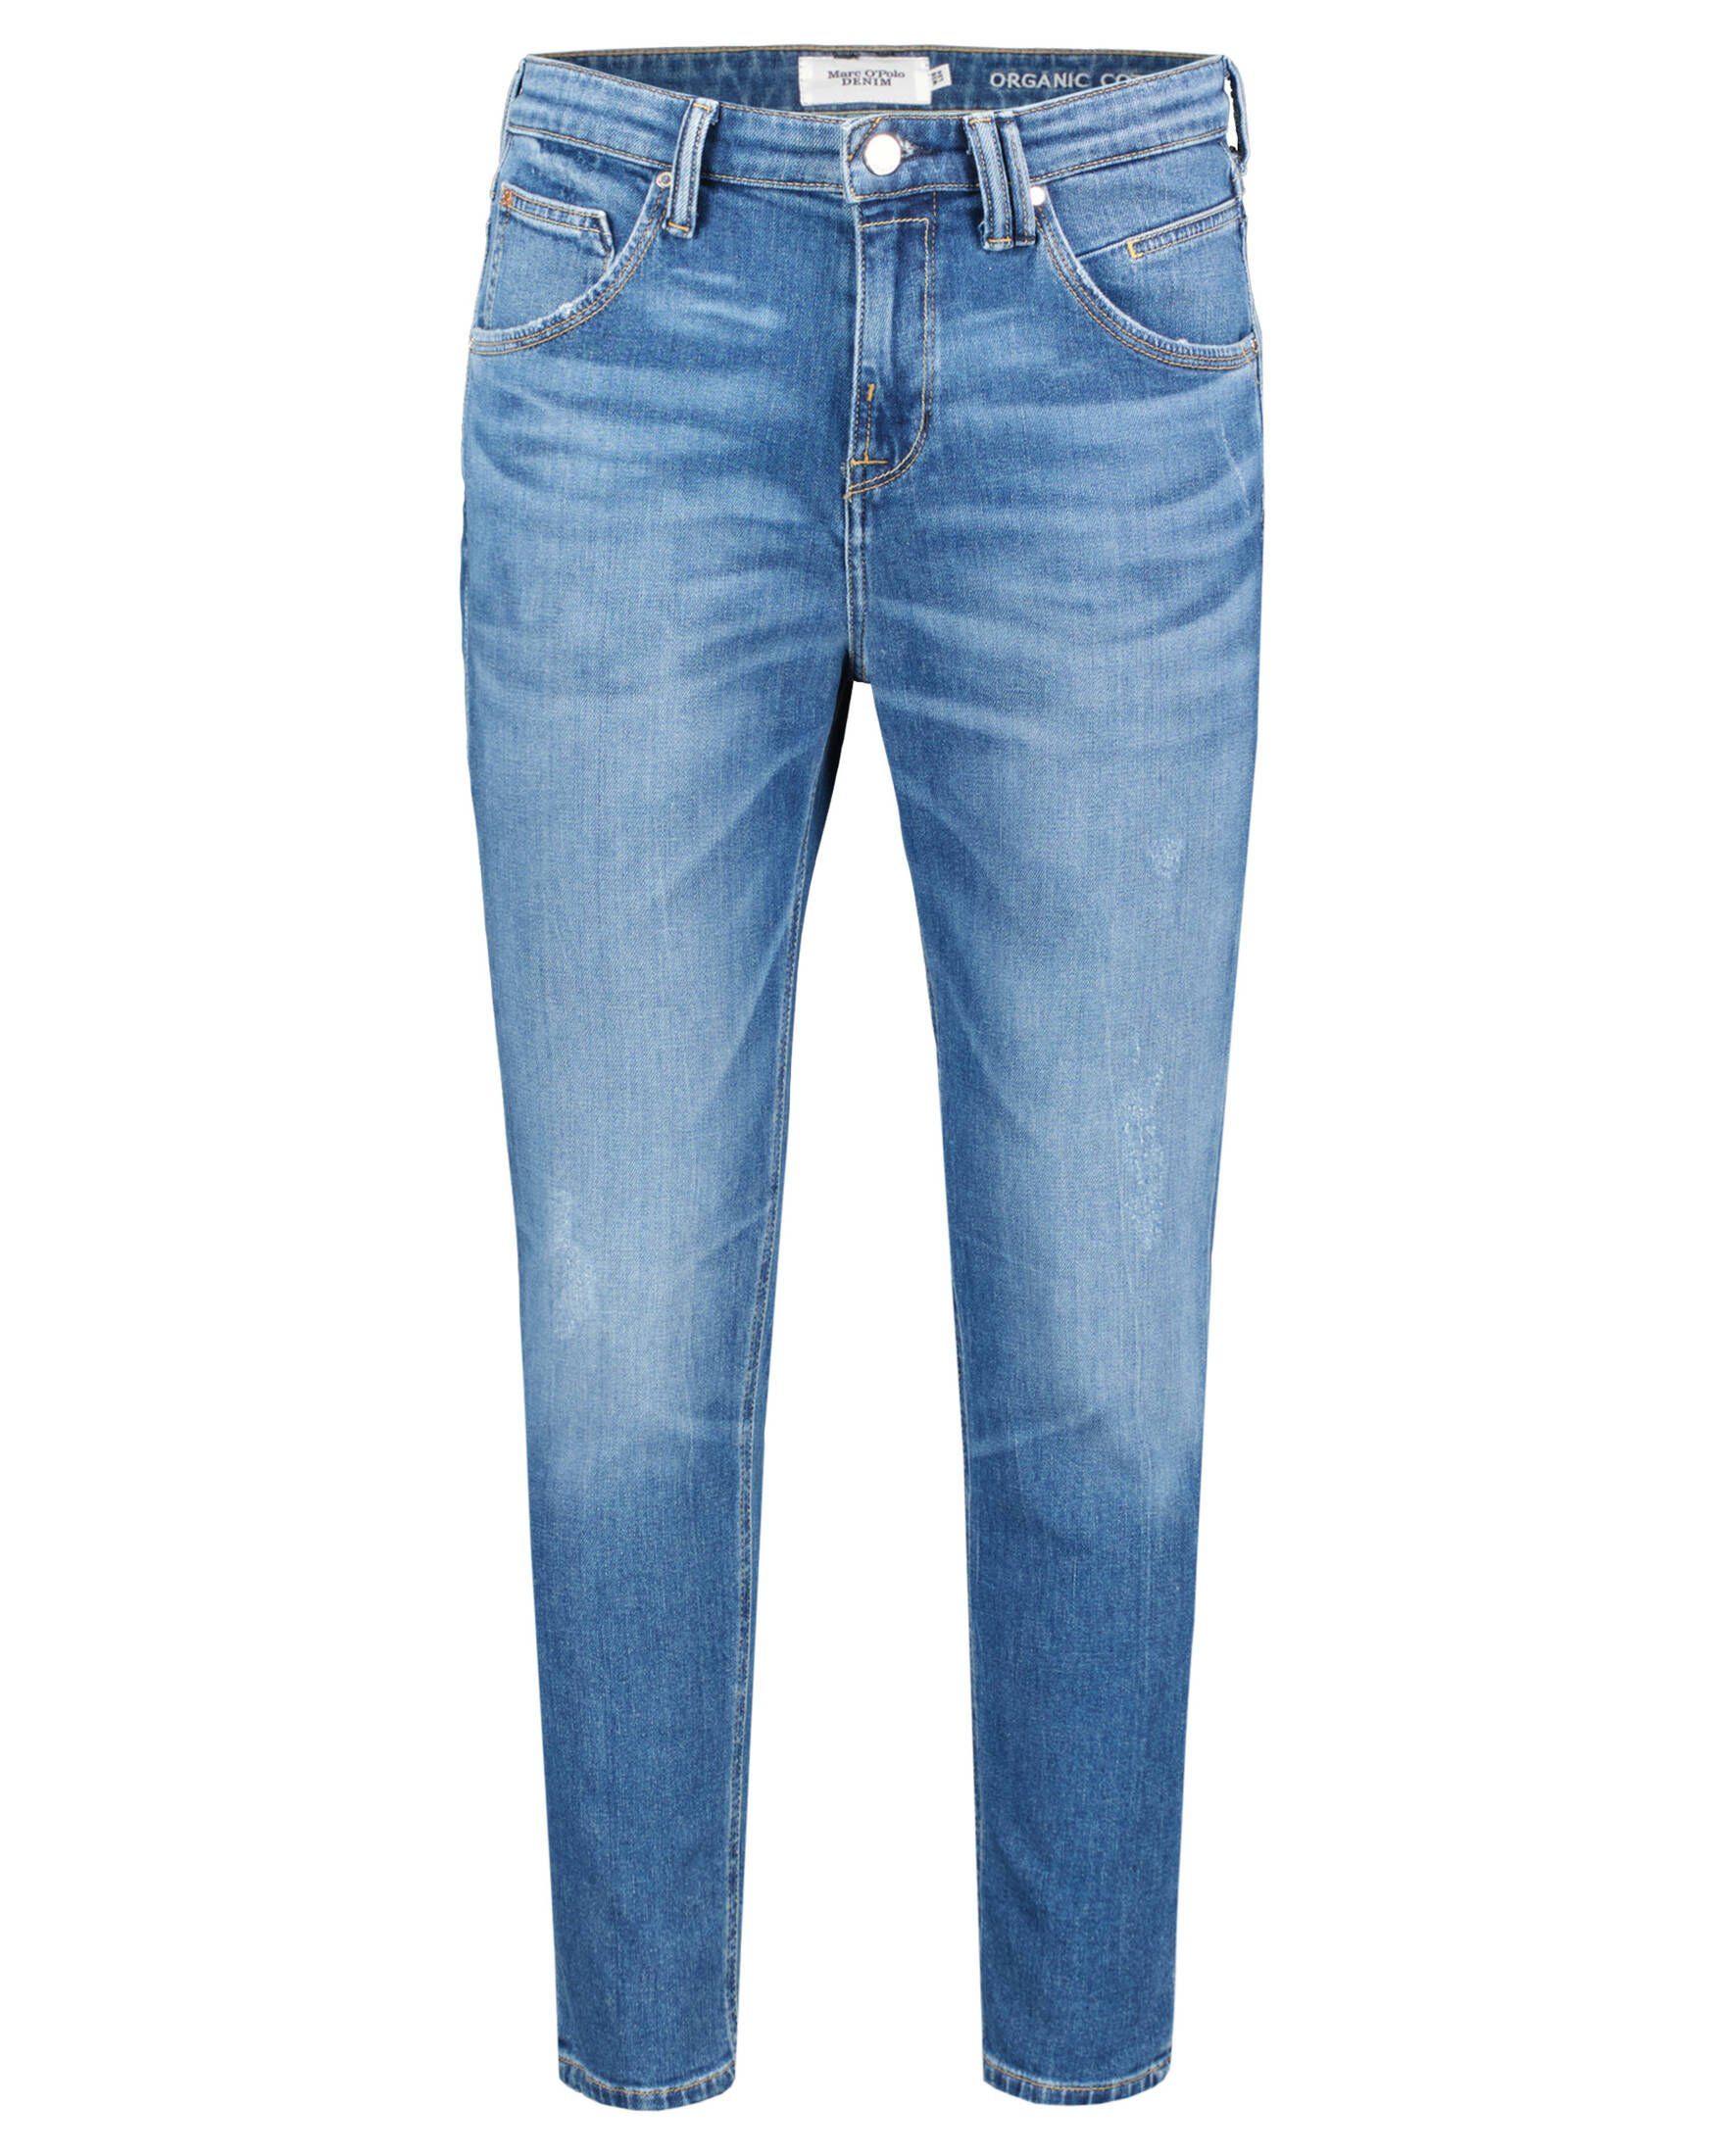 Marc O'Polo Damen Jeans online kaufen | OTTO